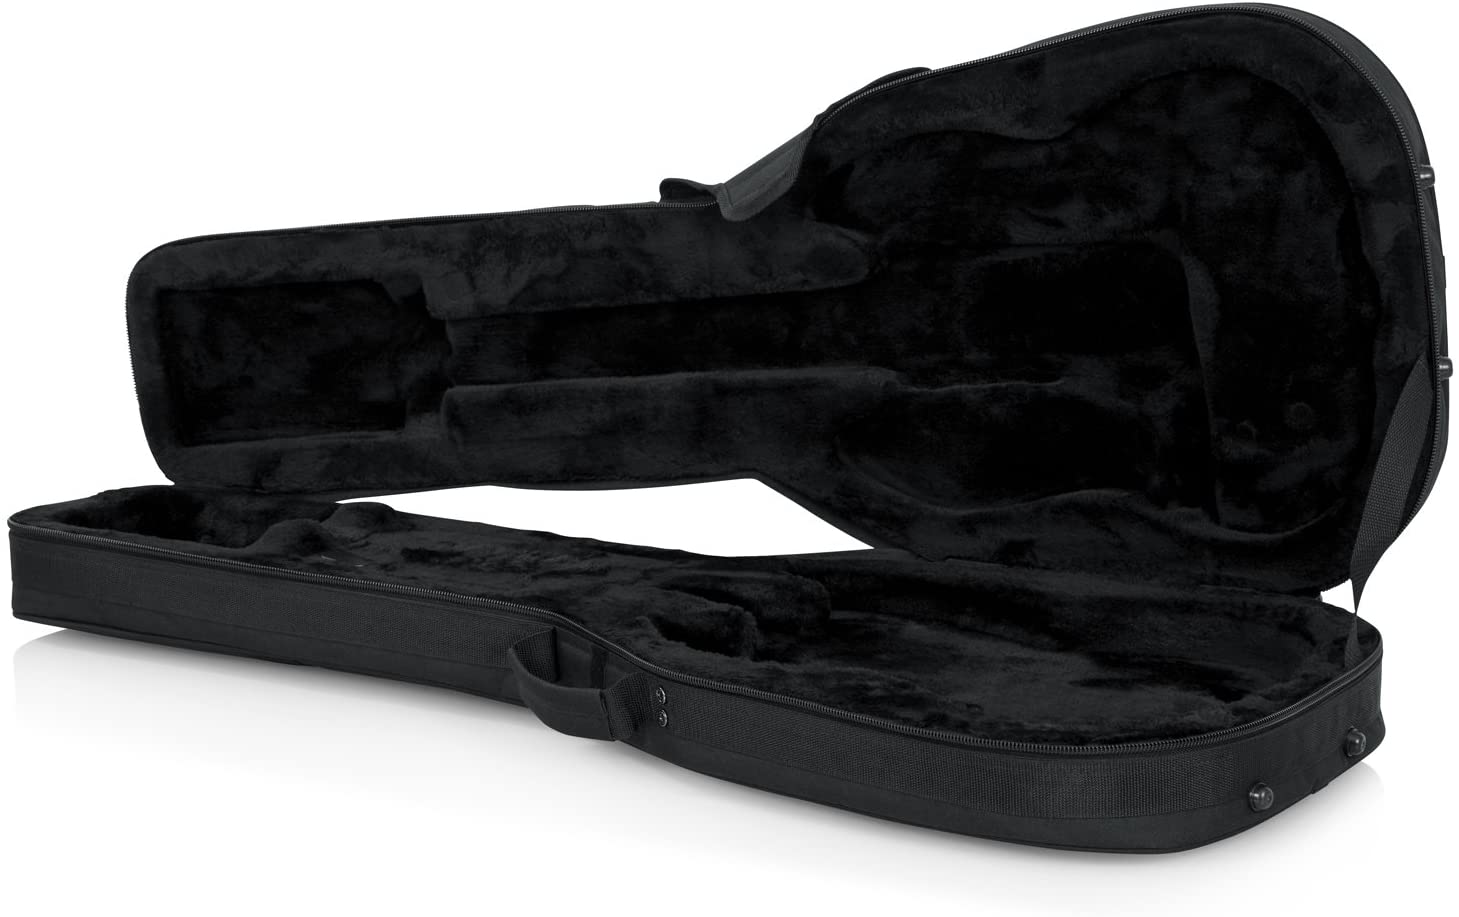 Gator Cases Lightweight Polyfoam Guitar Case for SG Double Cut-away Guitars (GL-SG) - Pro-Distributing